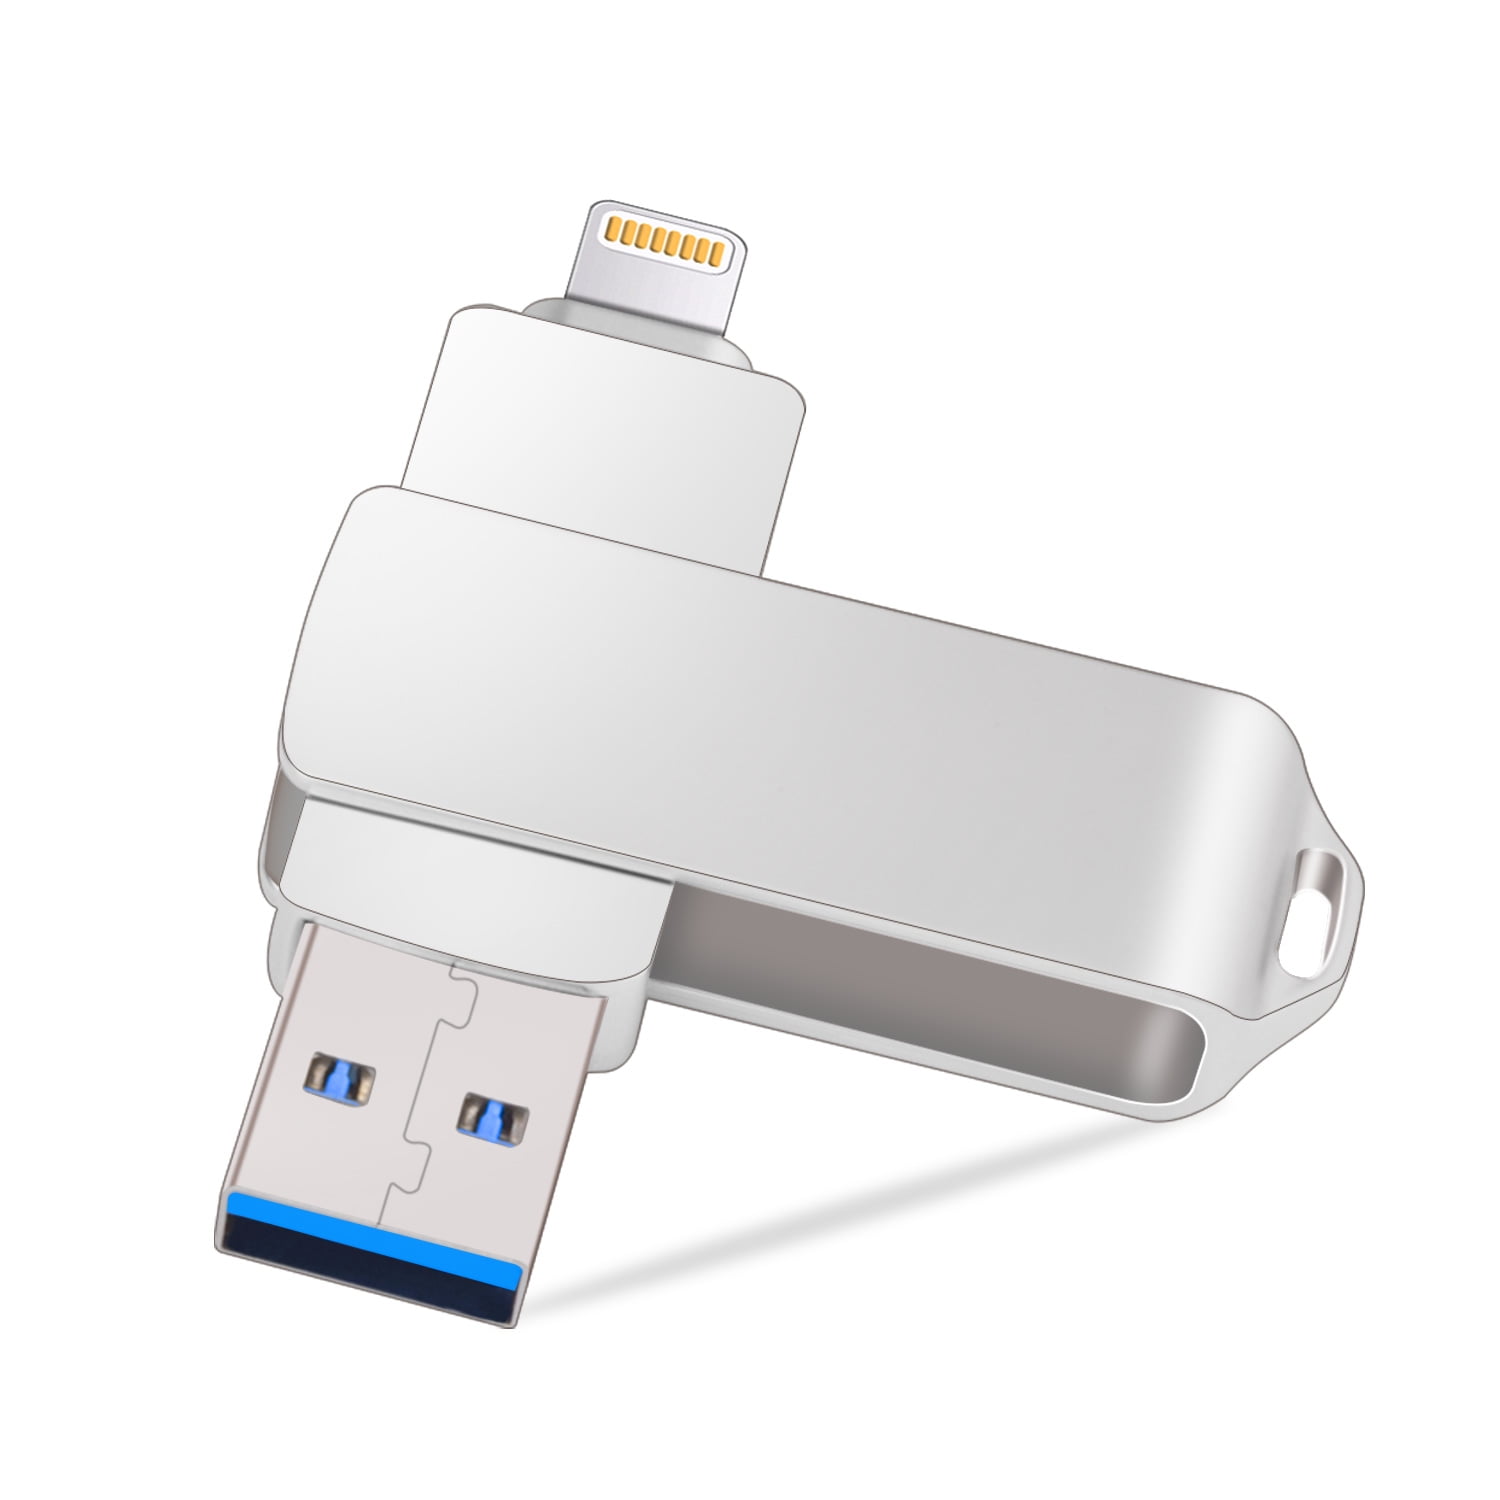 MFI iDiskk 64 GB USB Flash Drive for iPhone and iPad Storage Memory USB Stick with Lightning Connector Compatible to iOS iPhone XS,iPhone X,iPad mini,iPad air,Mac and Computers